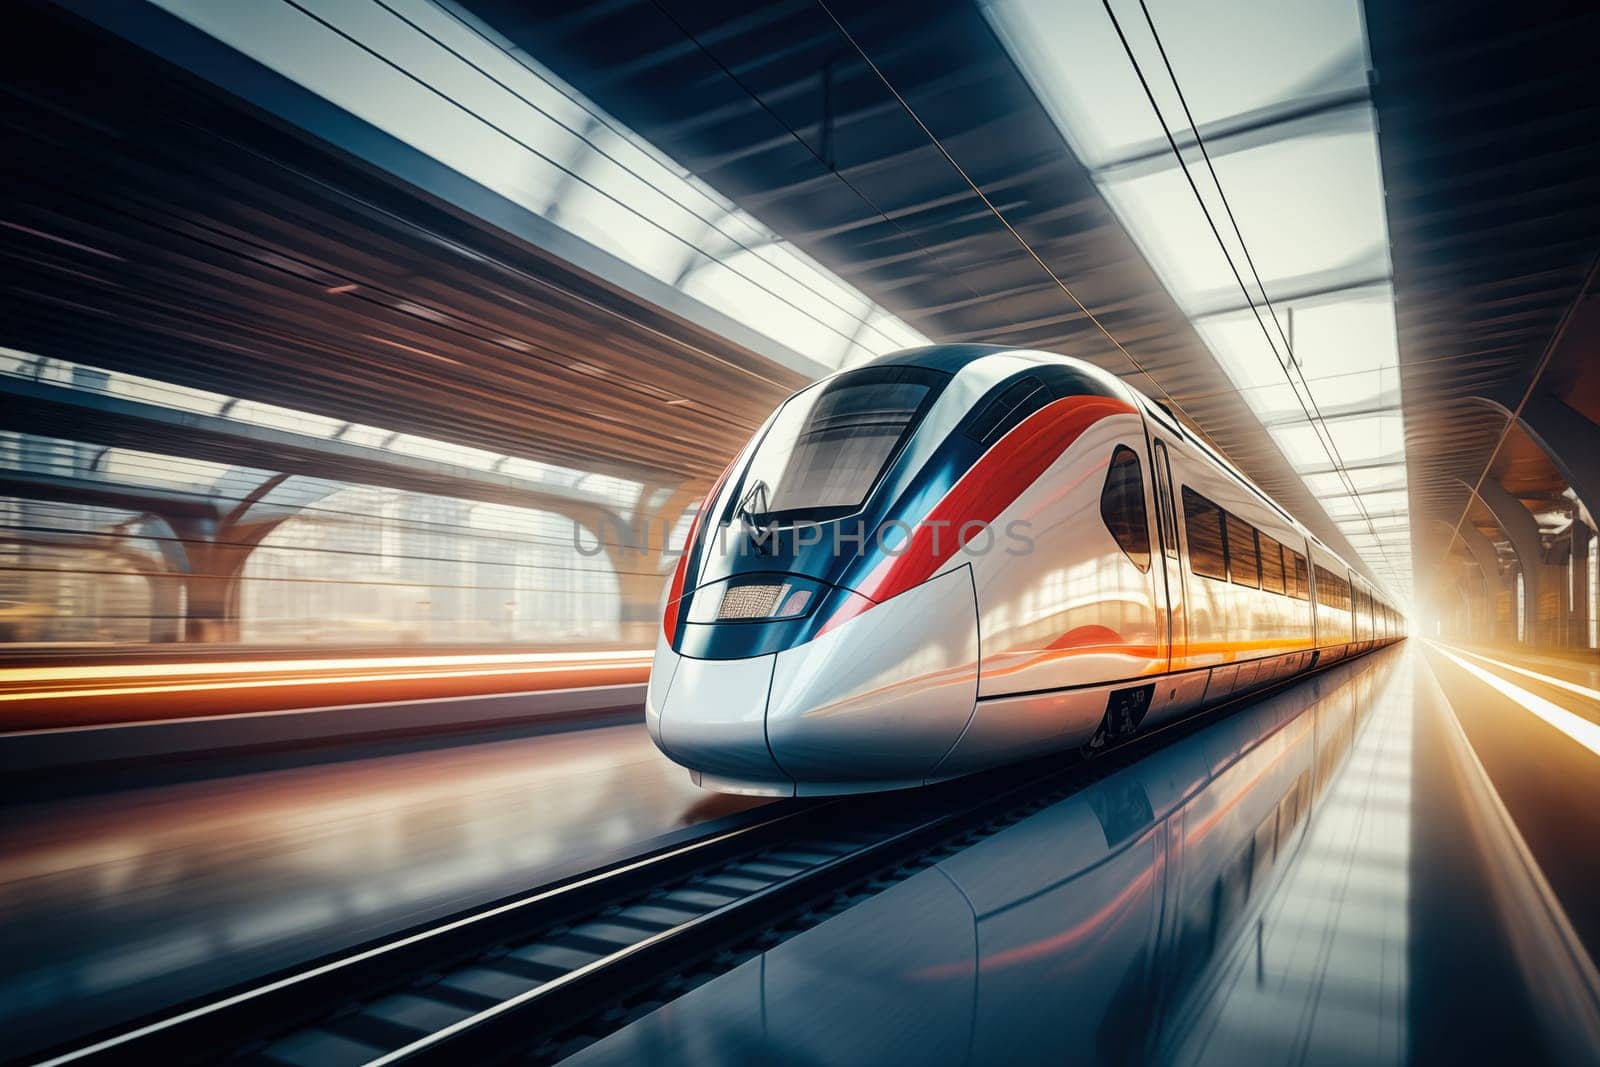 Modern high speed train in futuristic train station by dimol